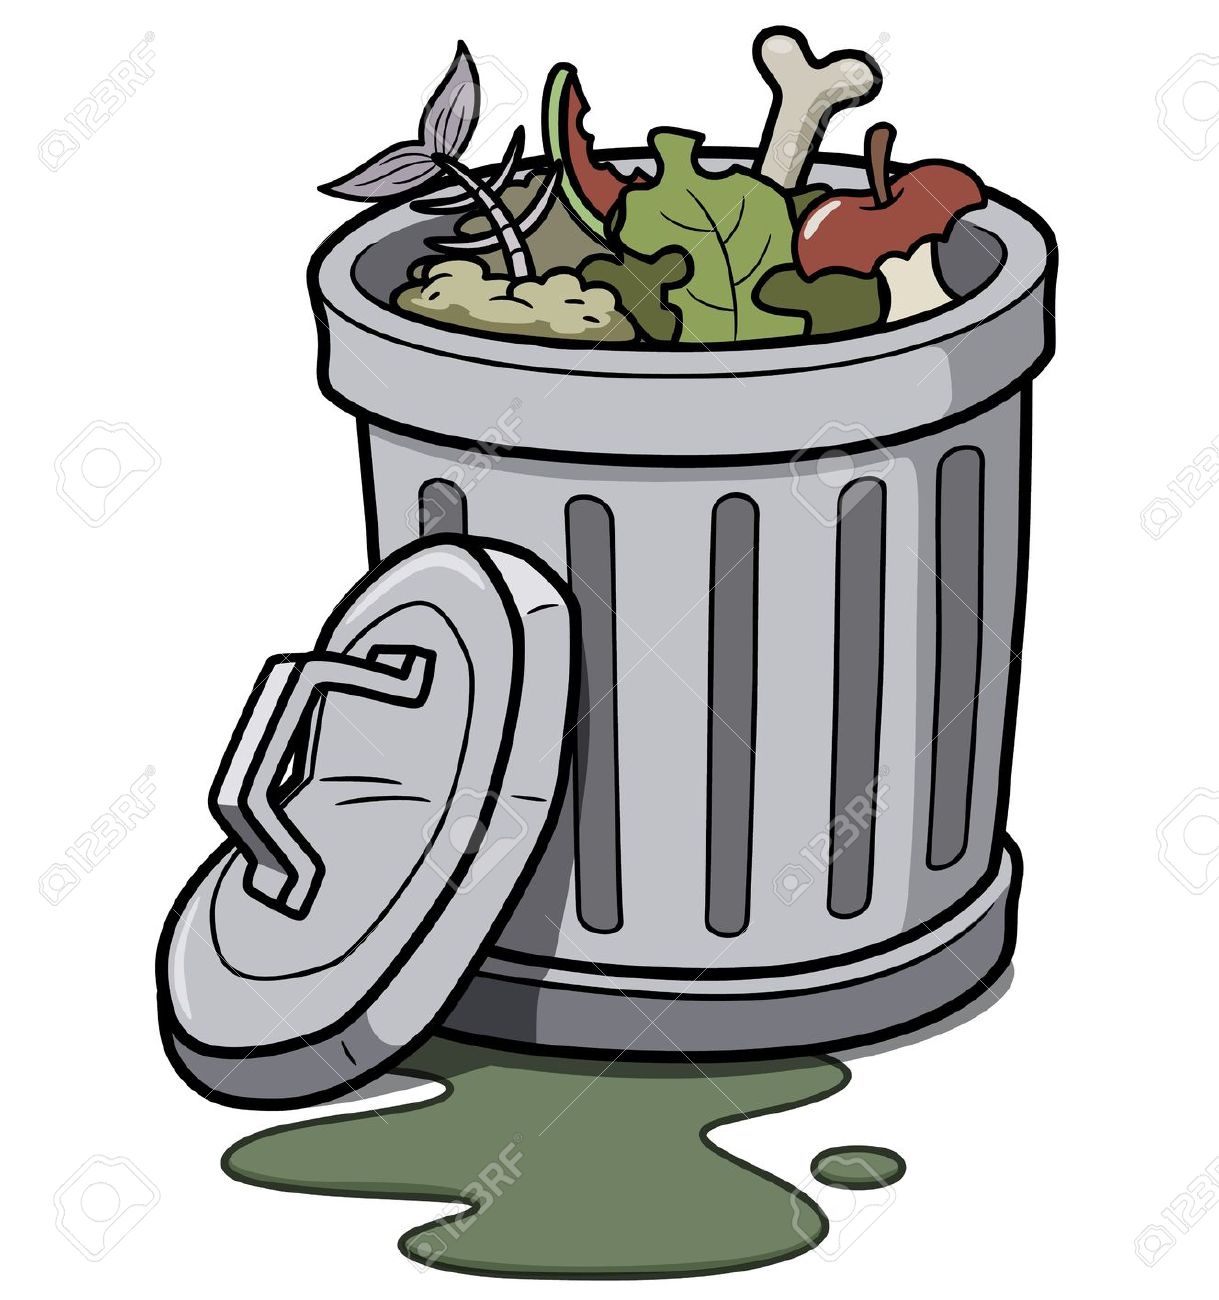 18782395-illustration-of-Trash-can-Stock-Vector-garbage.jpg